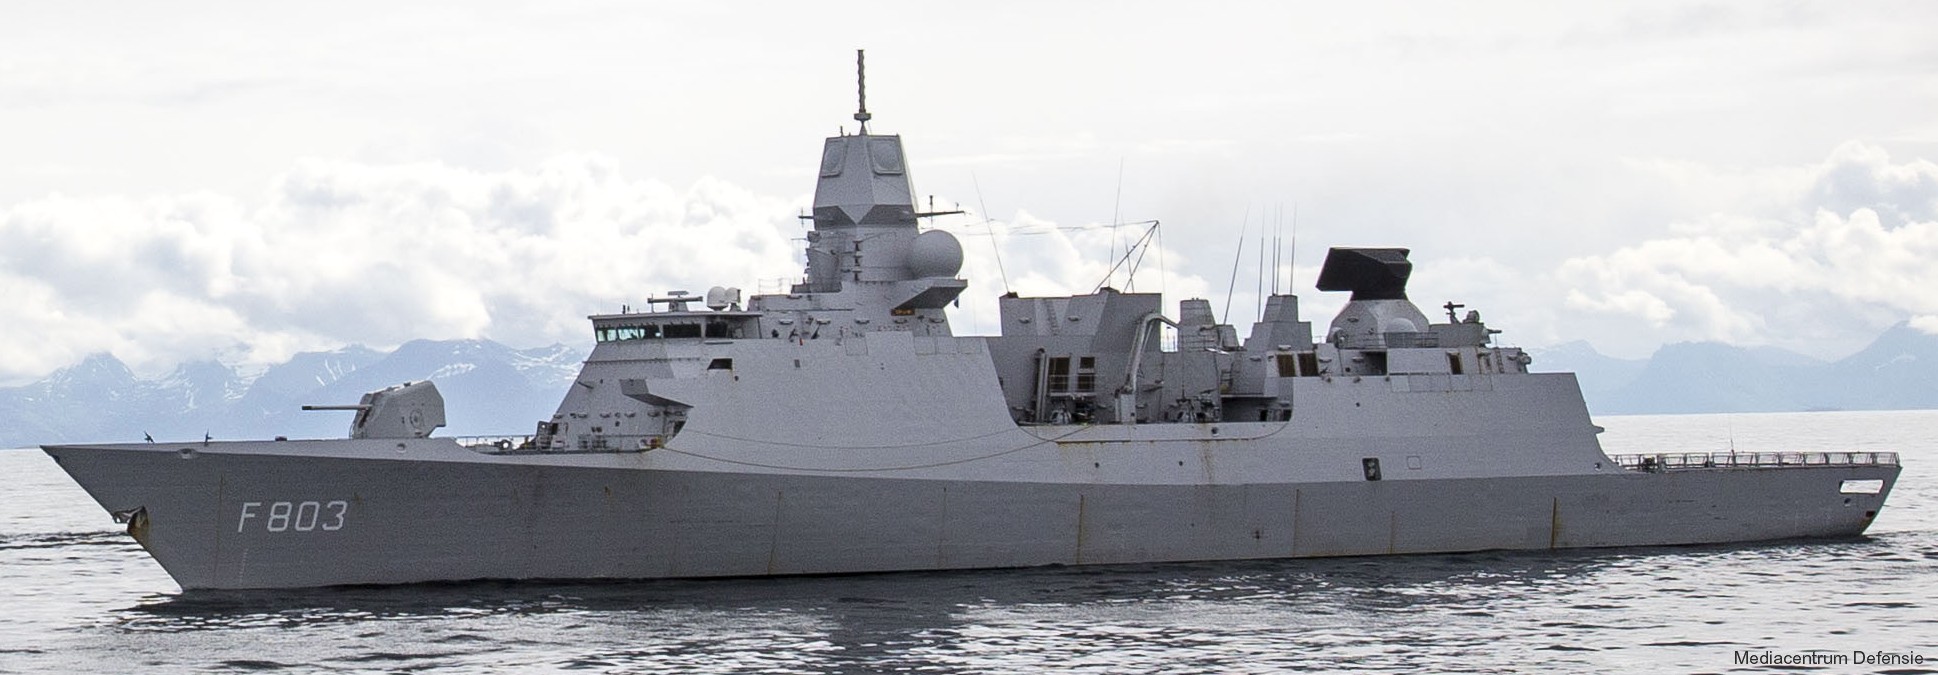 f-803 hnlms tromp guided missile frigate ffg air defense lcf royal netherlands navy 14 de zeven provincien class